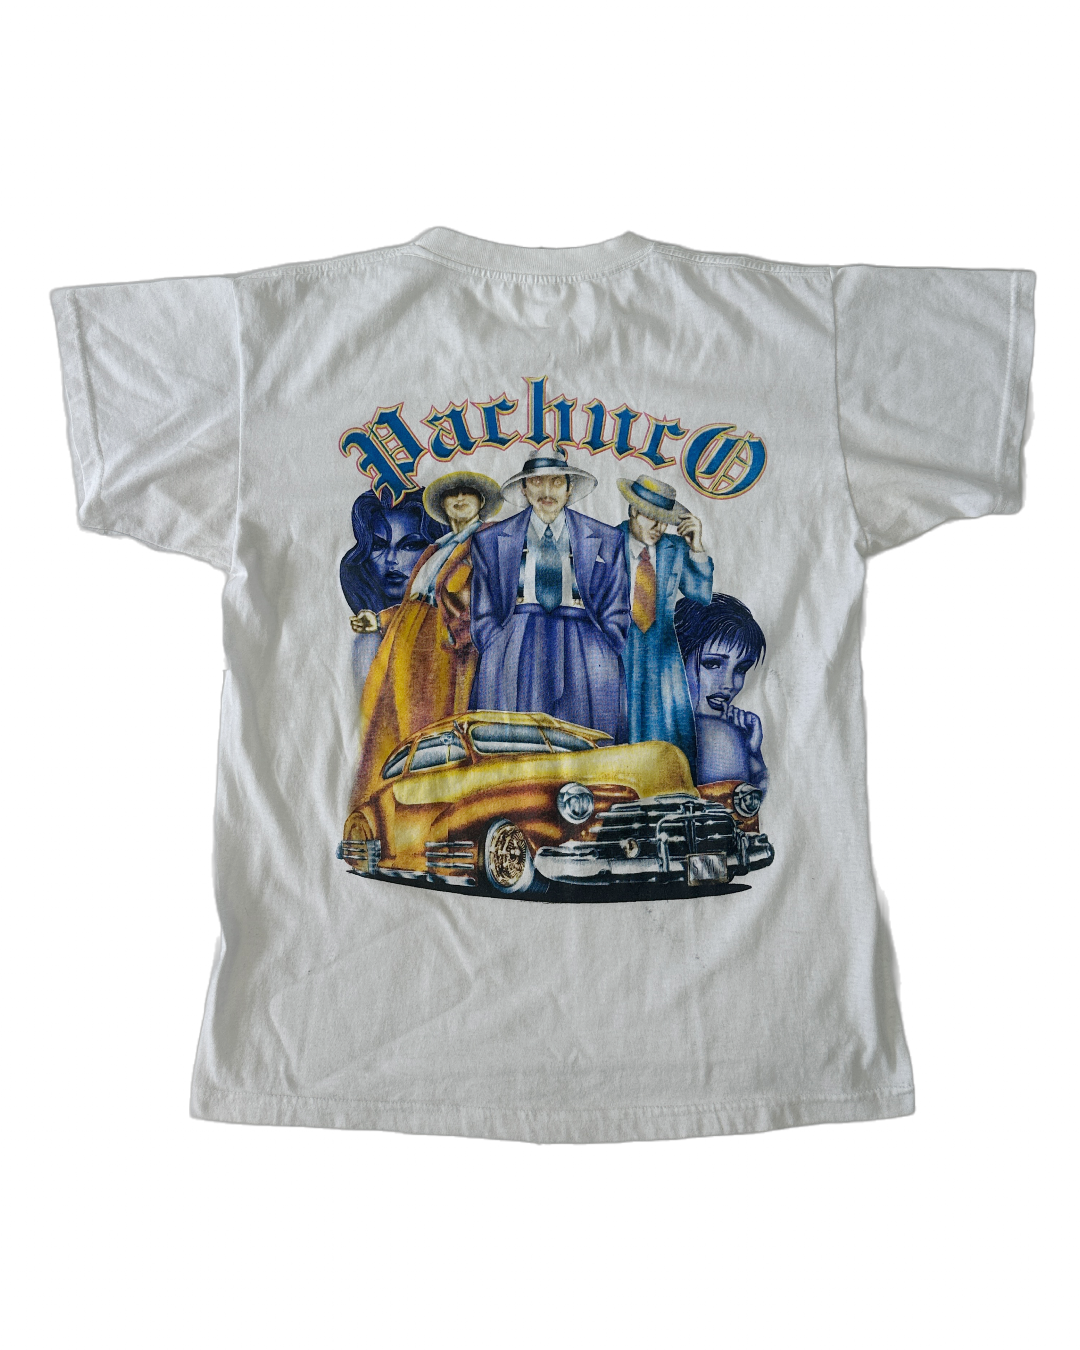 Playera Pachuco Cholo Vintage - M